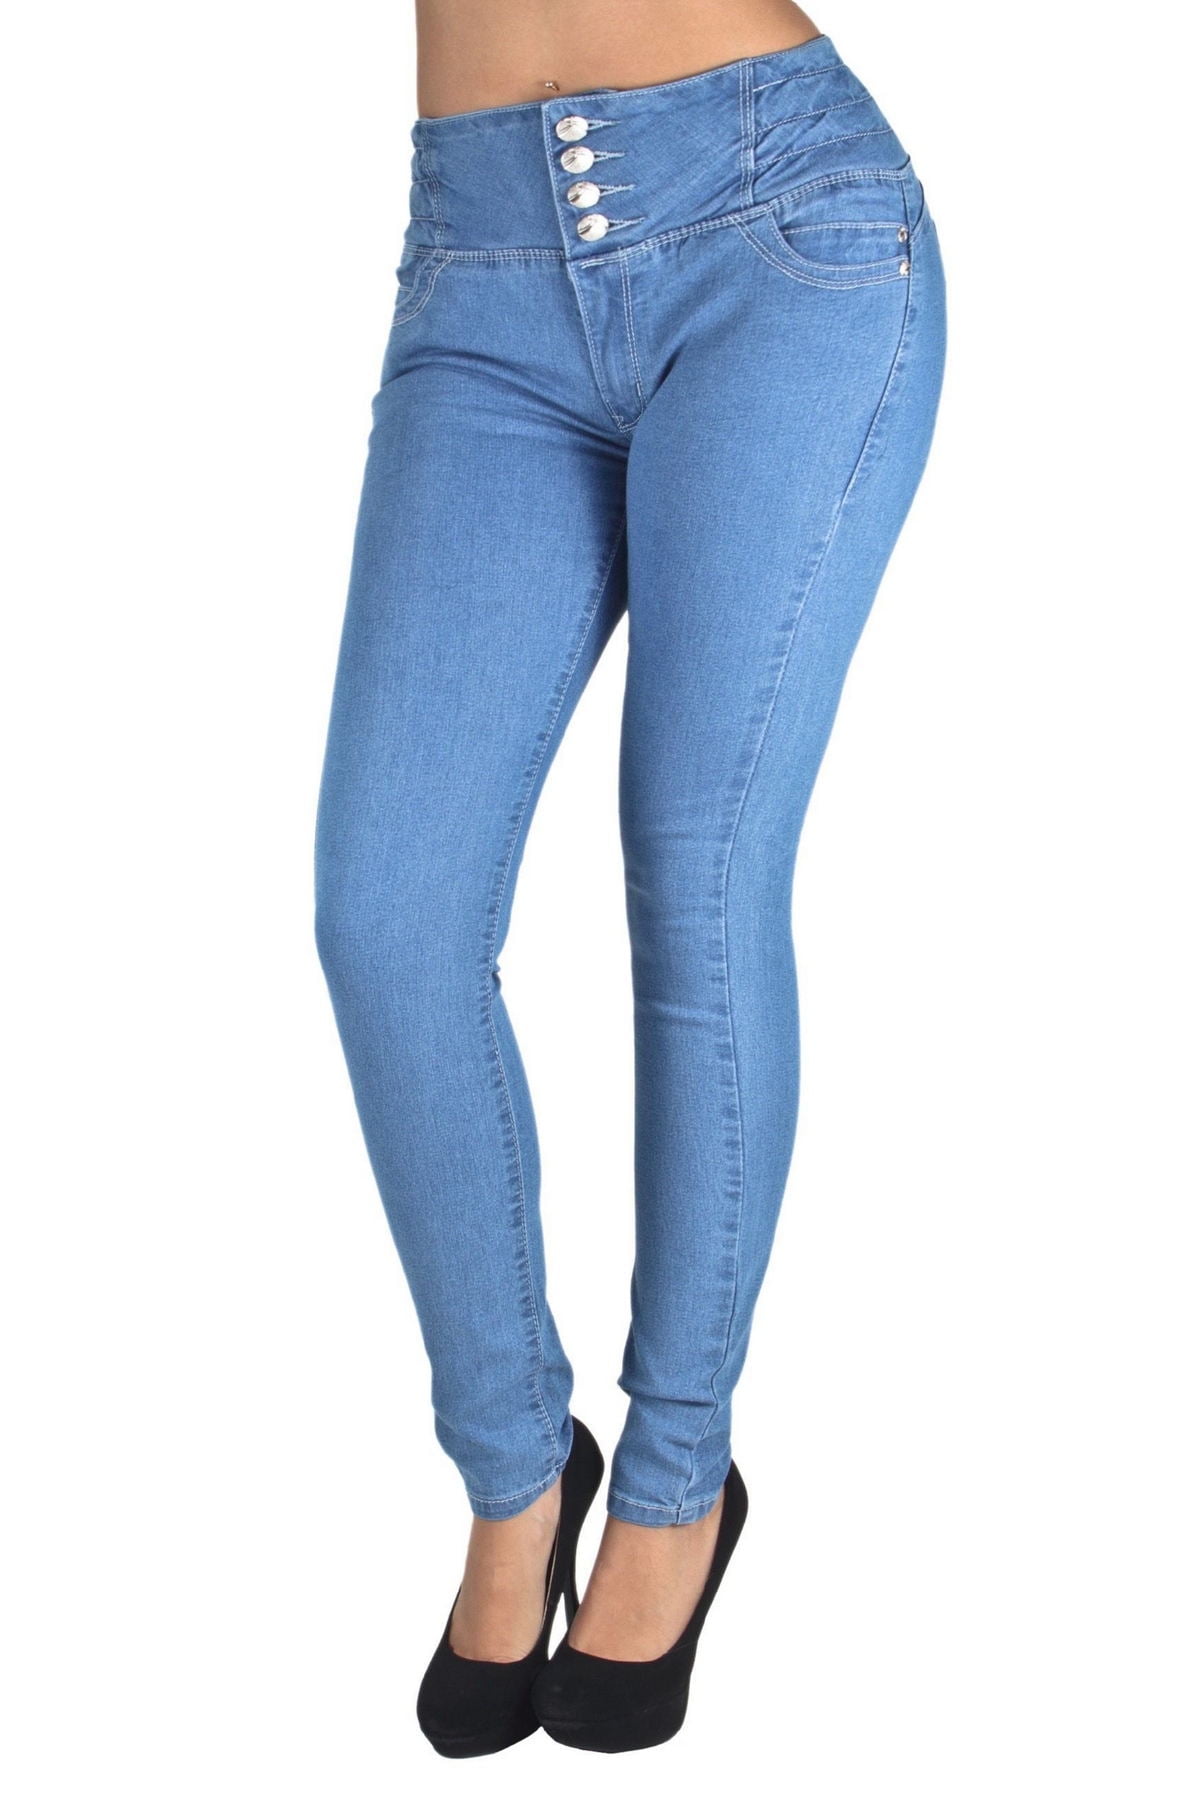 Fashion2Love Plus Size Butt Lift Elastic Waist Skinny Jeans - Walmart.com